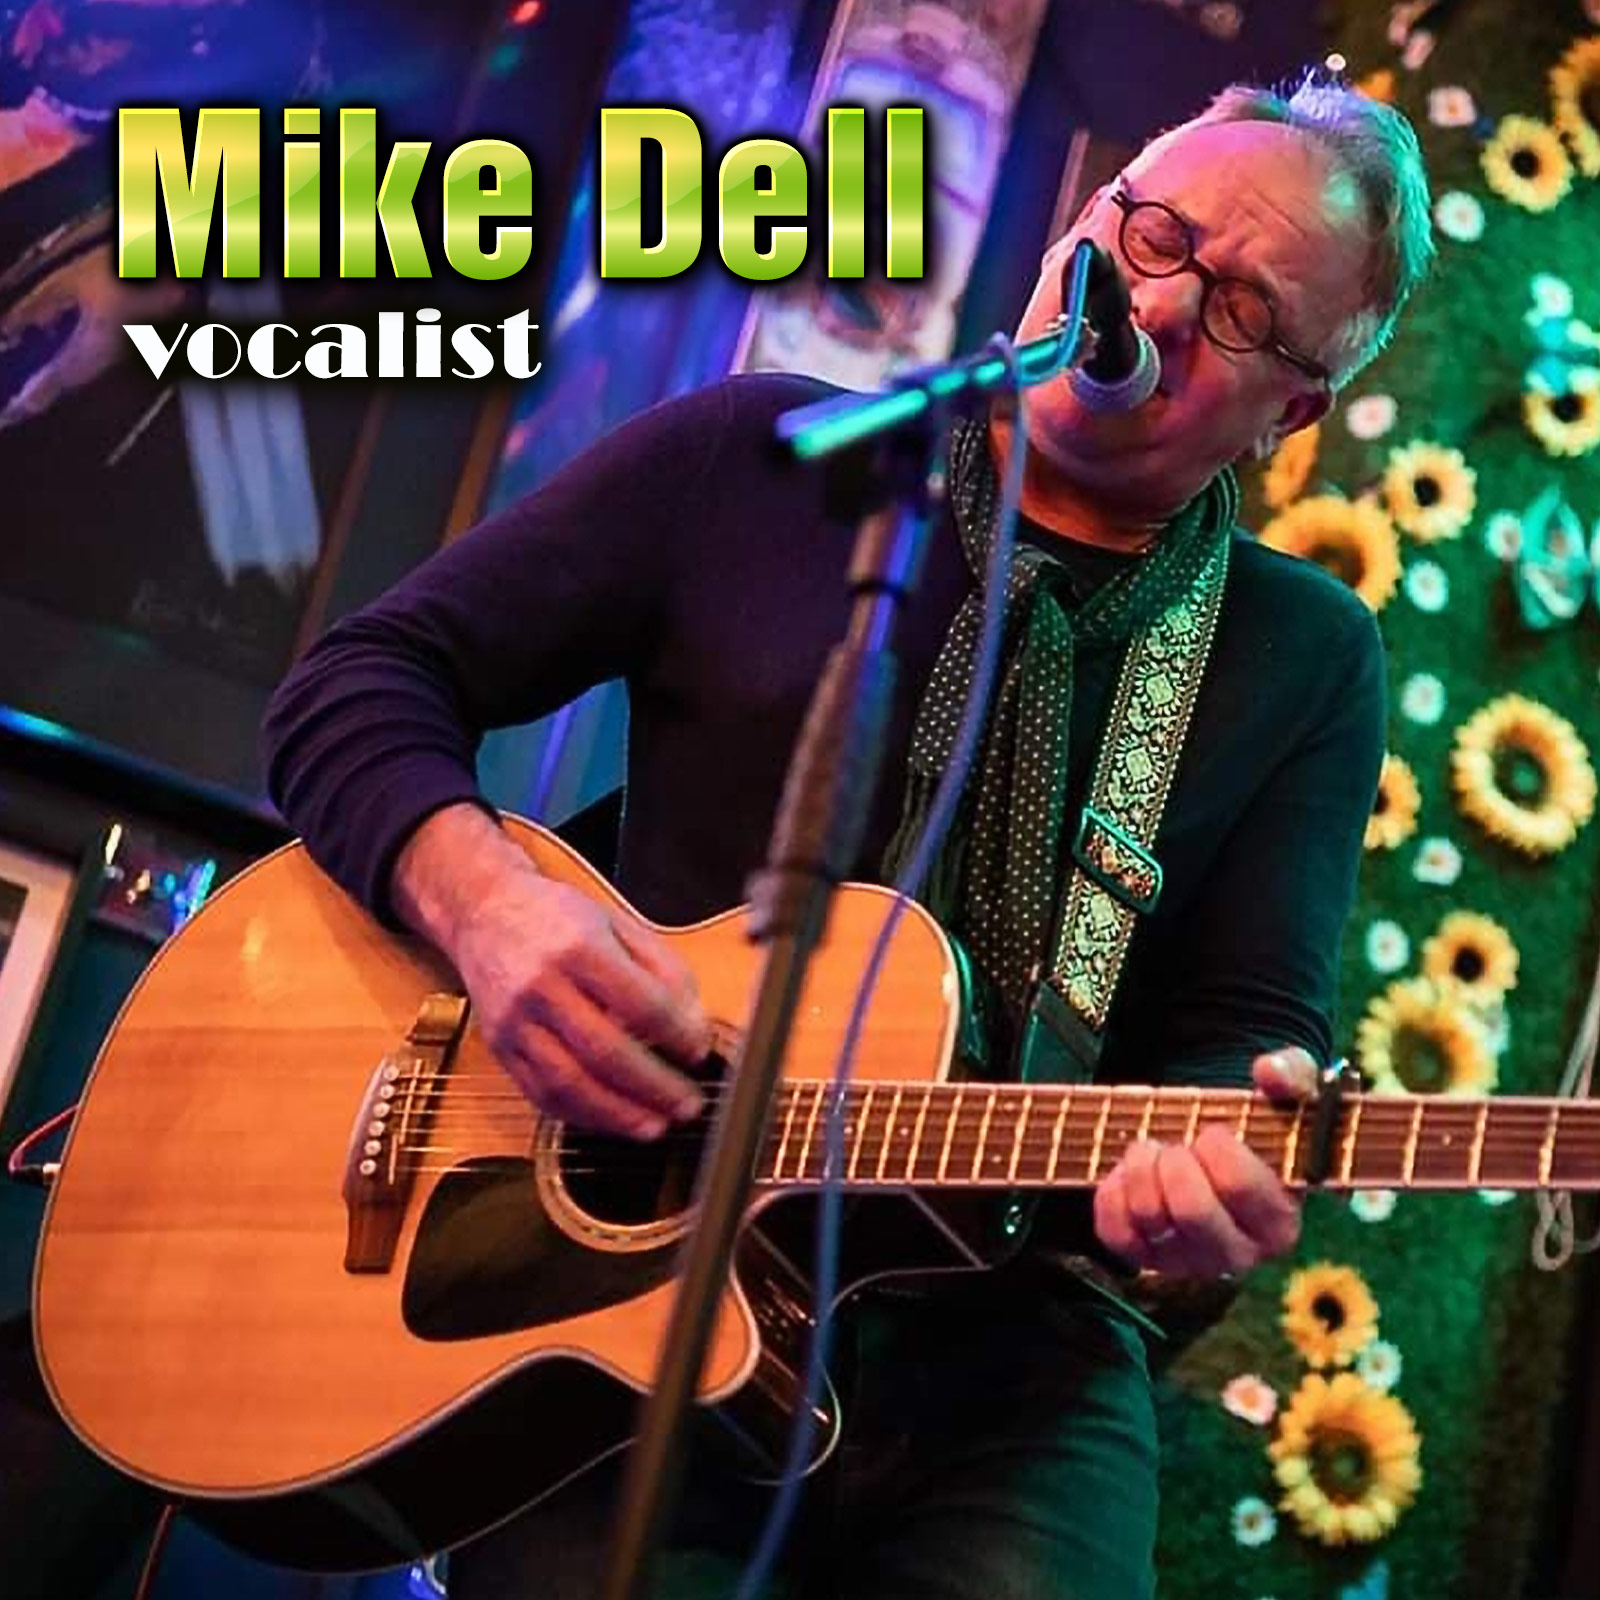 Michael Dell - guitar vocalist